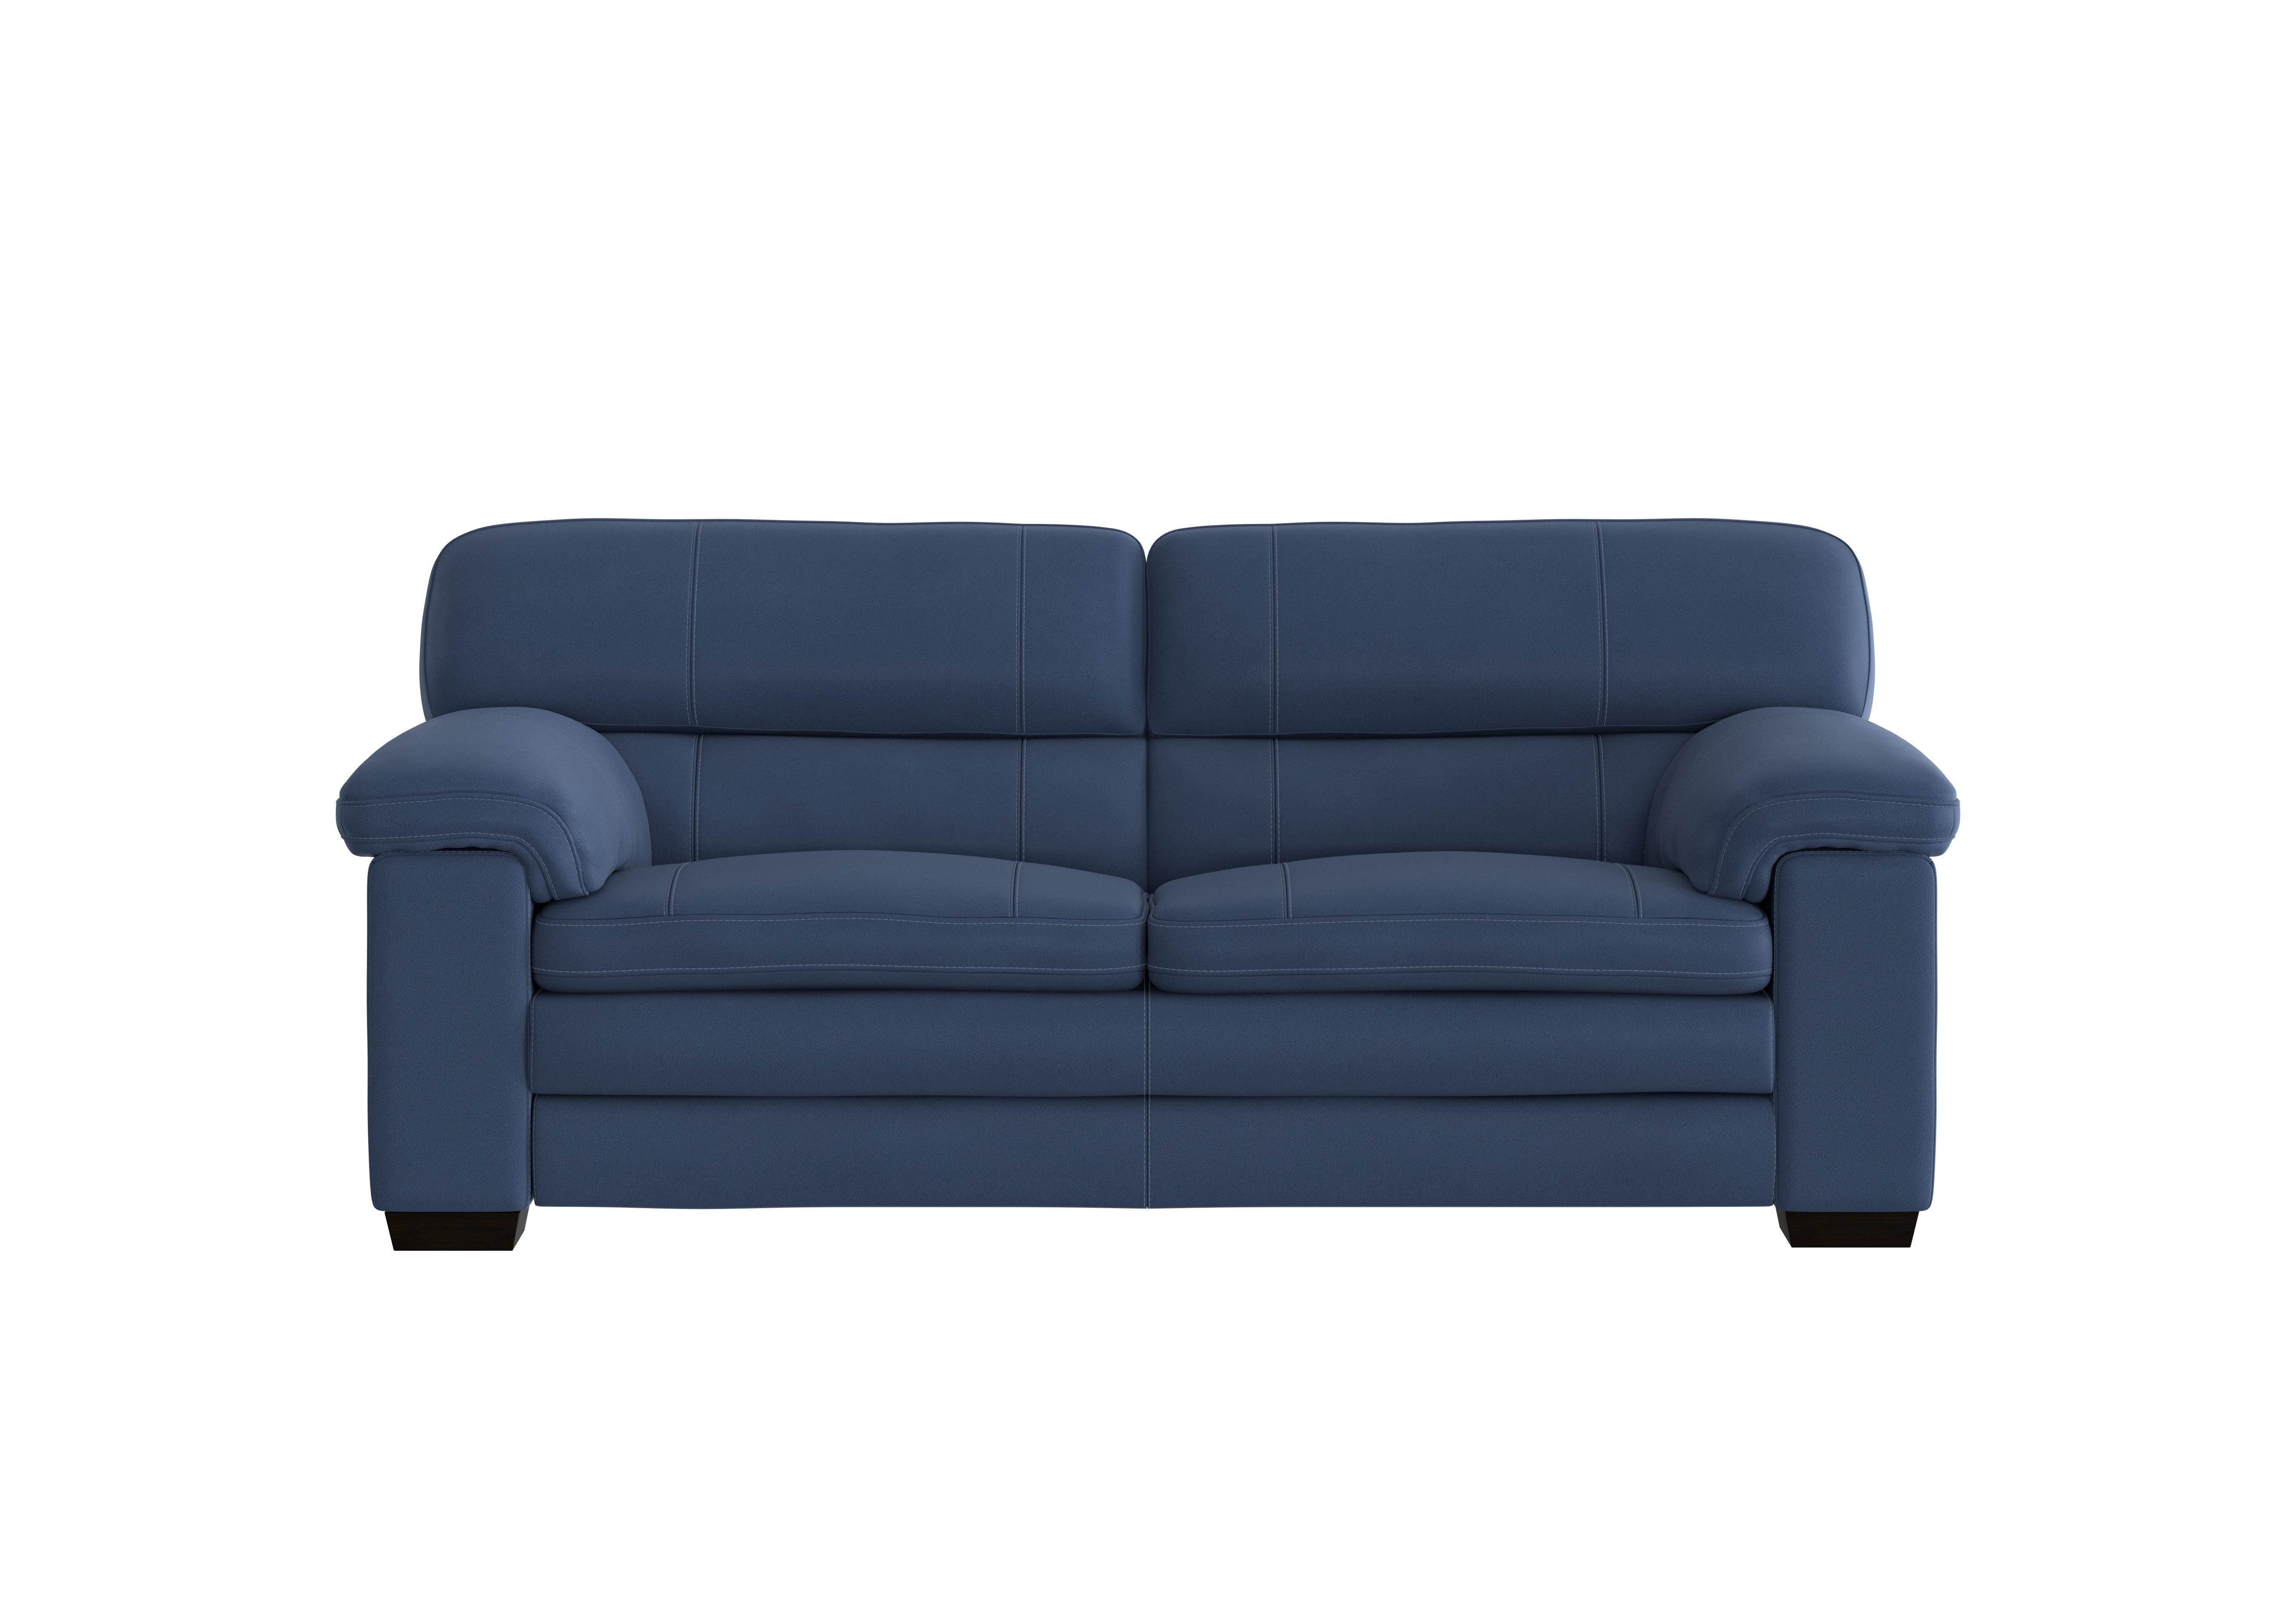 Cozee Fabric 2.5 Seater Sofa in Bfa-Blj-R10 Blue on Furniture Village